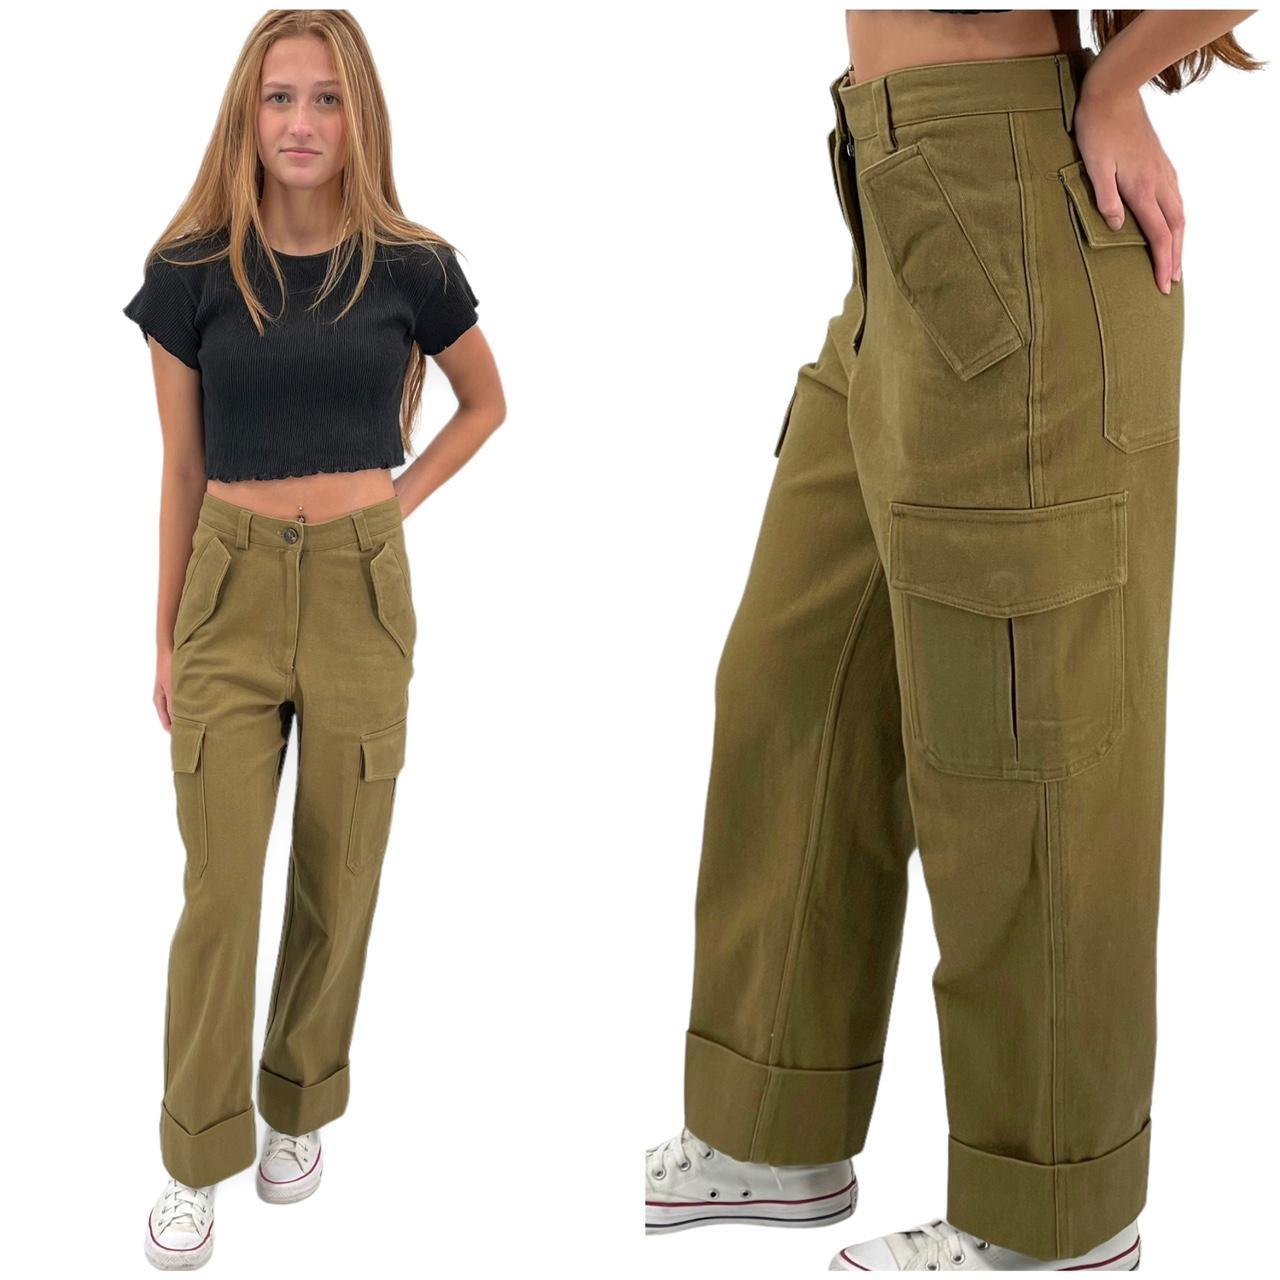 H&M cargo pants in a dark khaki green color. Size - Depop